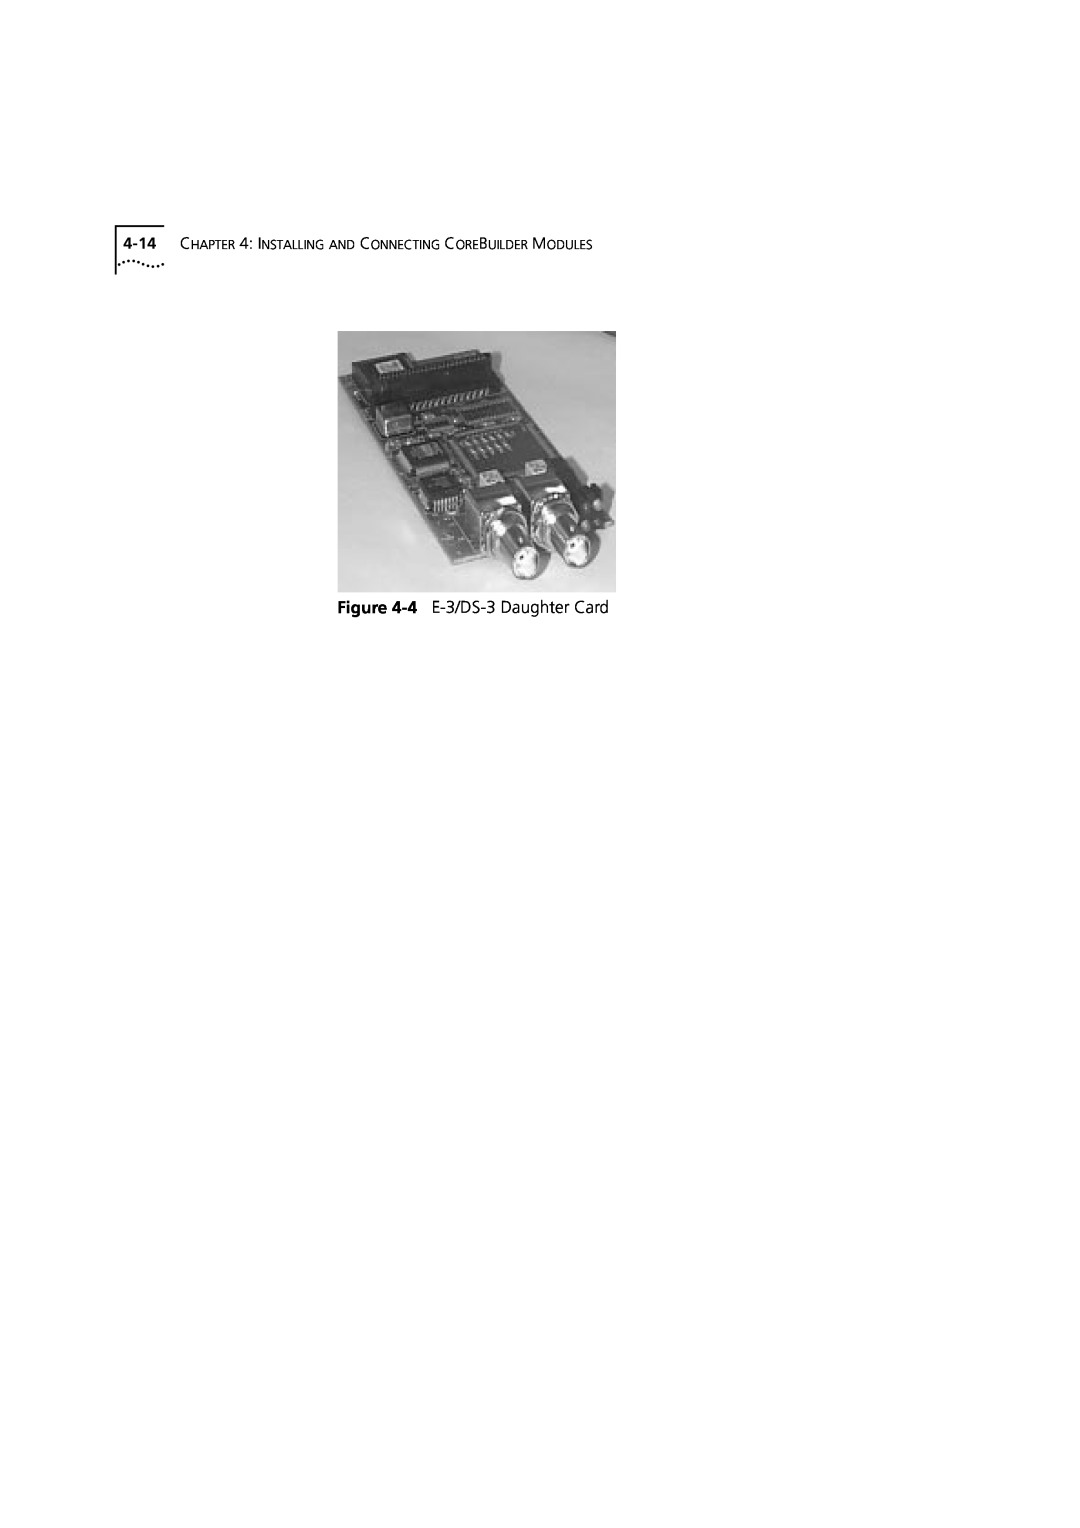 3Com DUA3700-0BAA04 manual 4 E-3/DS-3 Daughter Card, Installing And Connecting Corebuilder Modules 